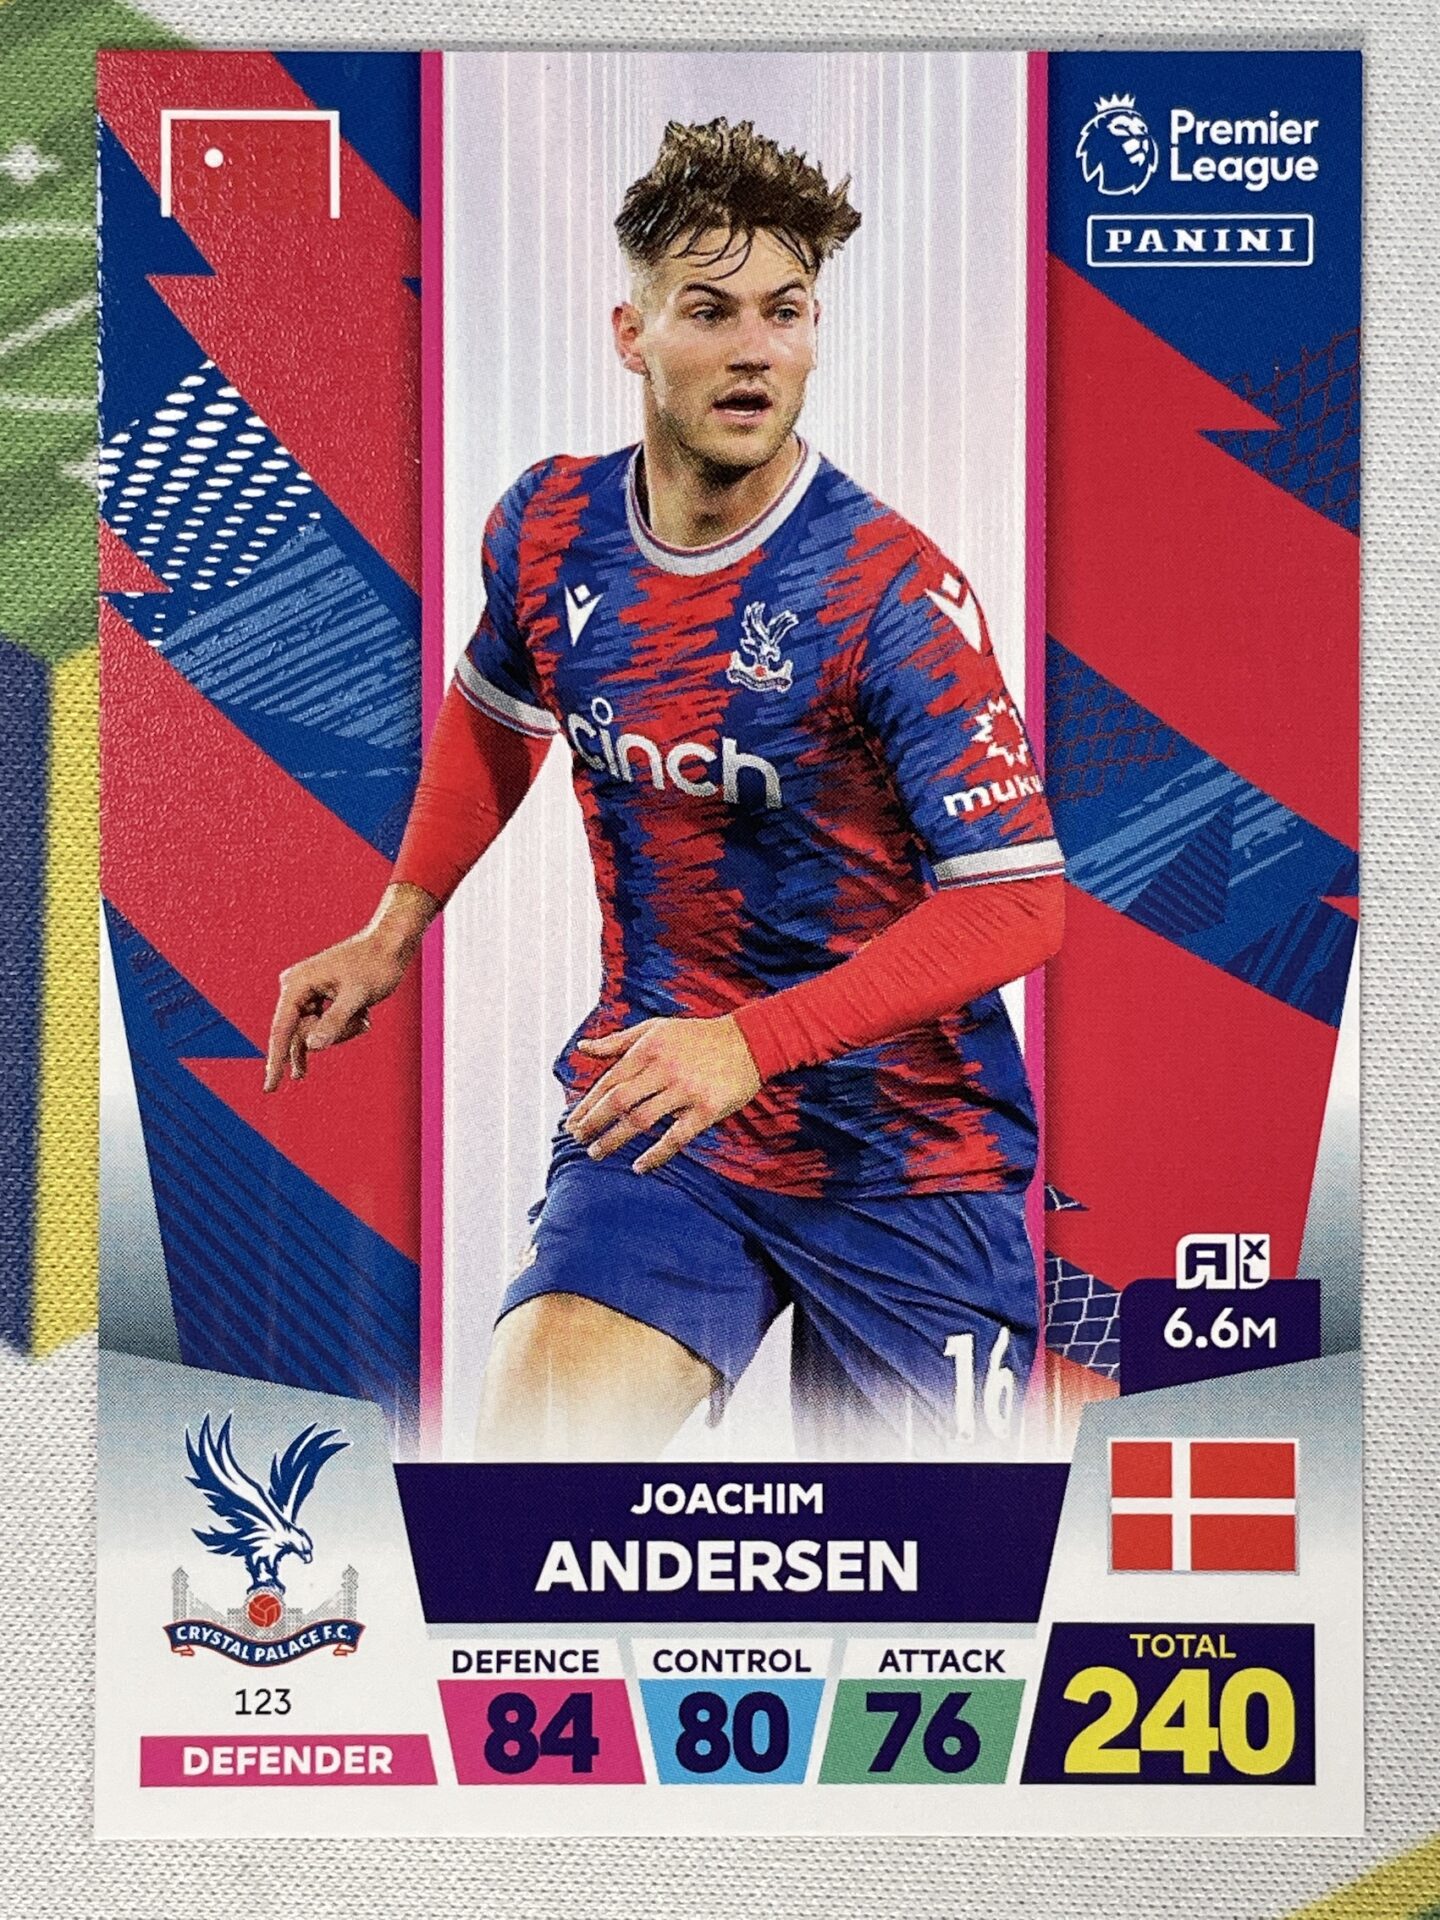 Adrenalyn XL EA Sports cards